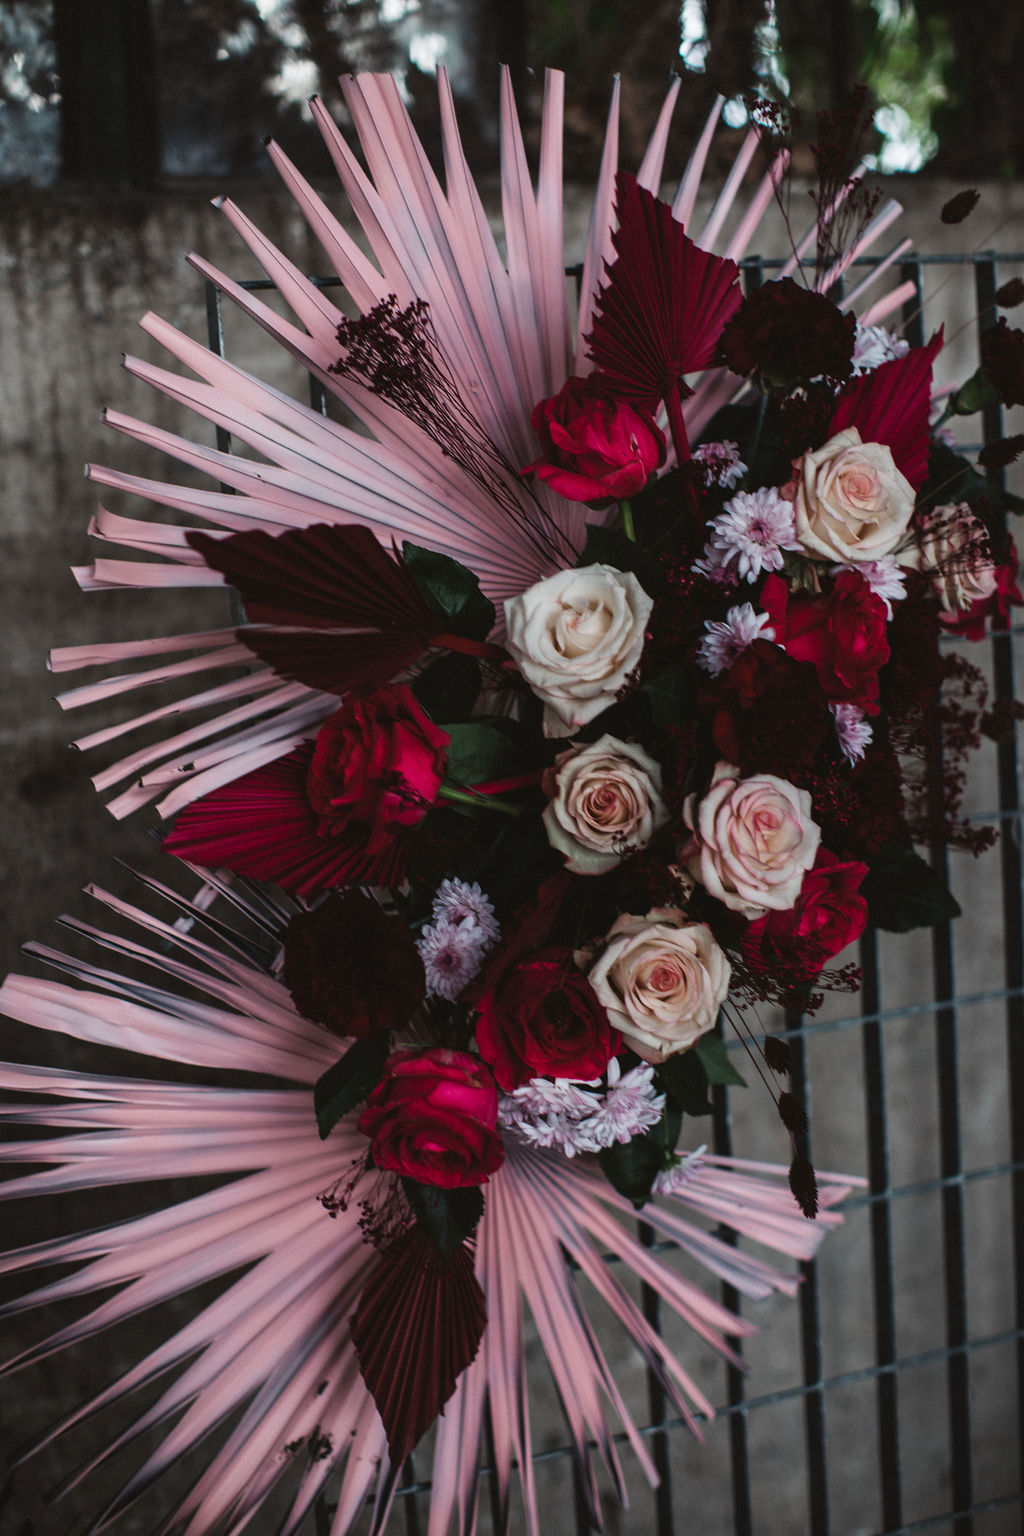 modern industrial wedding - alternative wedding - unconventional wedding - edgy wedding - unique wedding flowers - alternative wedding flowers - pink wedding flowers